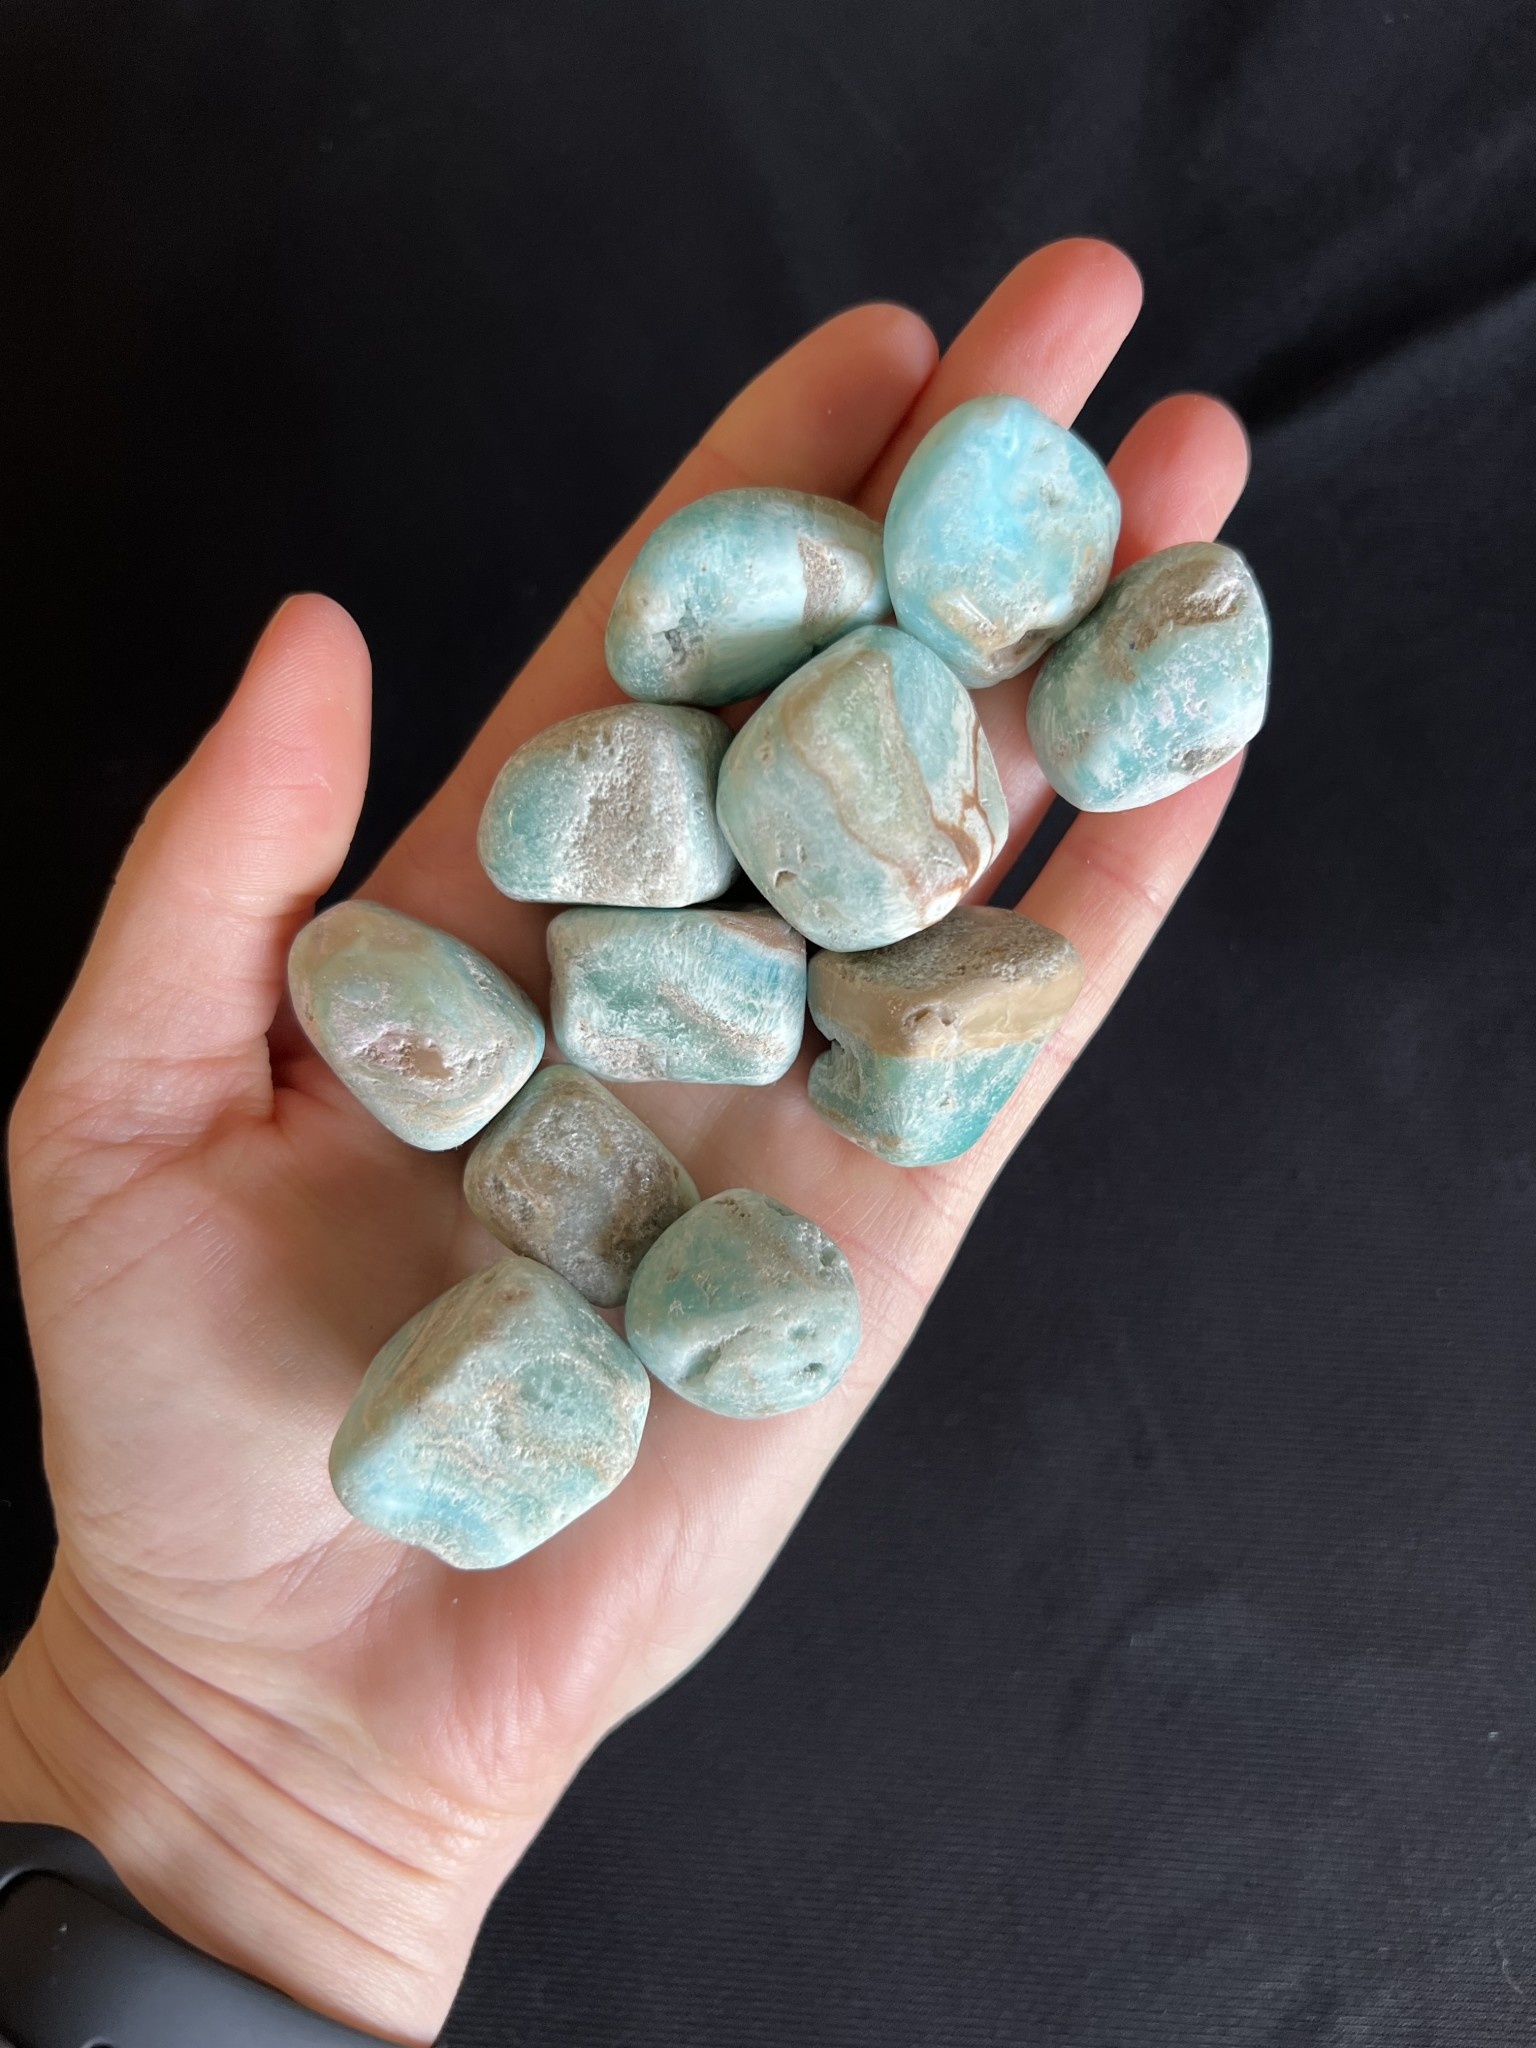 Blue Aragonite Tumbled Stones, Size Medium, purchase individual or